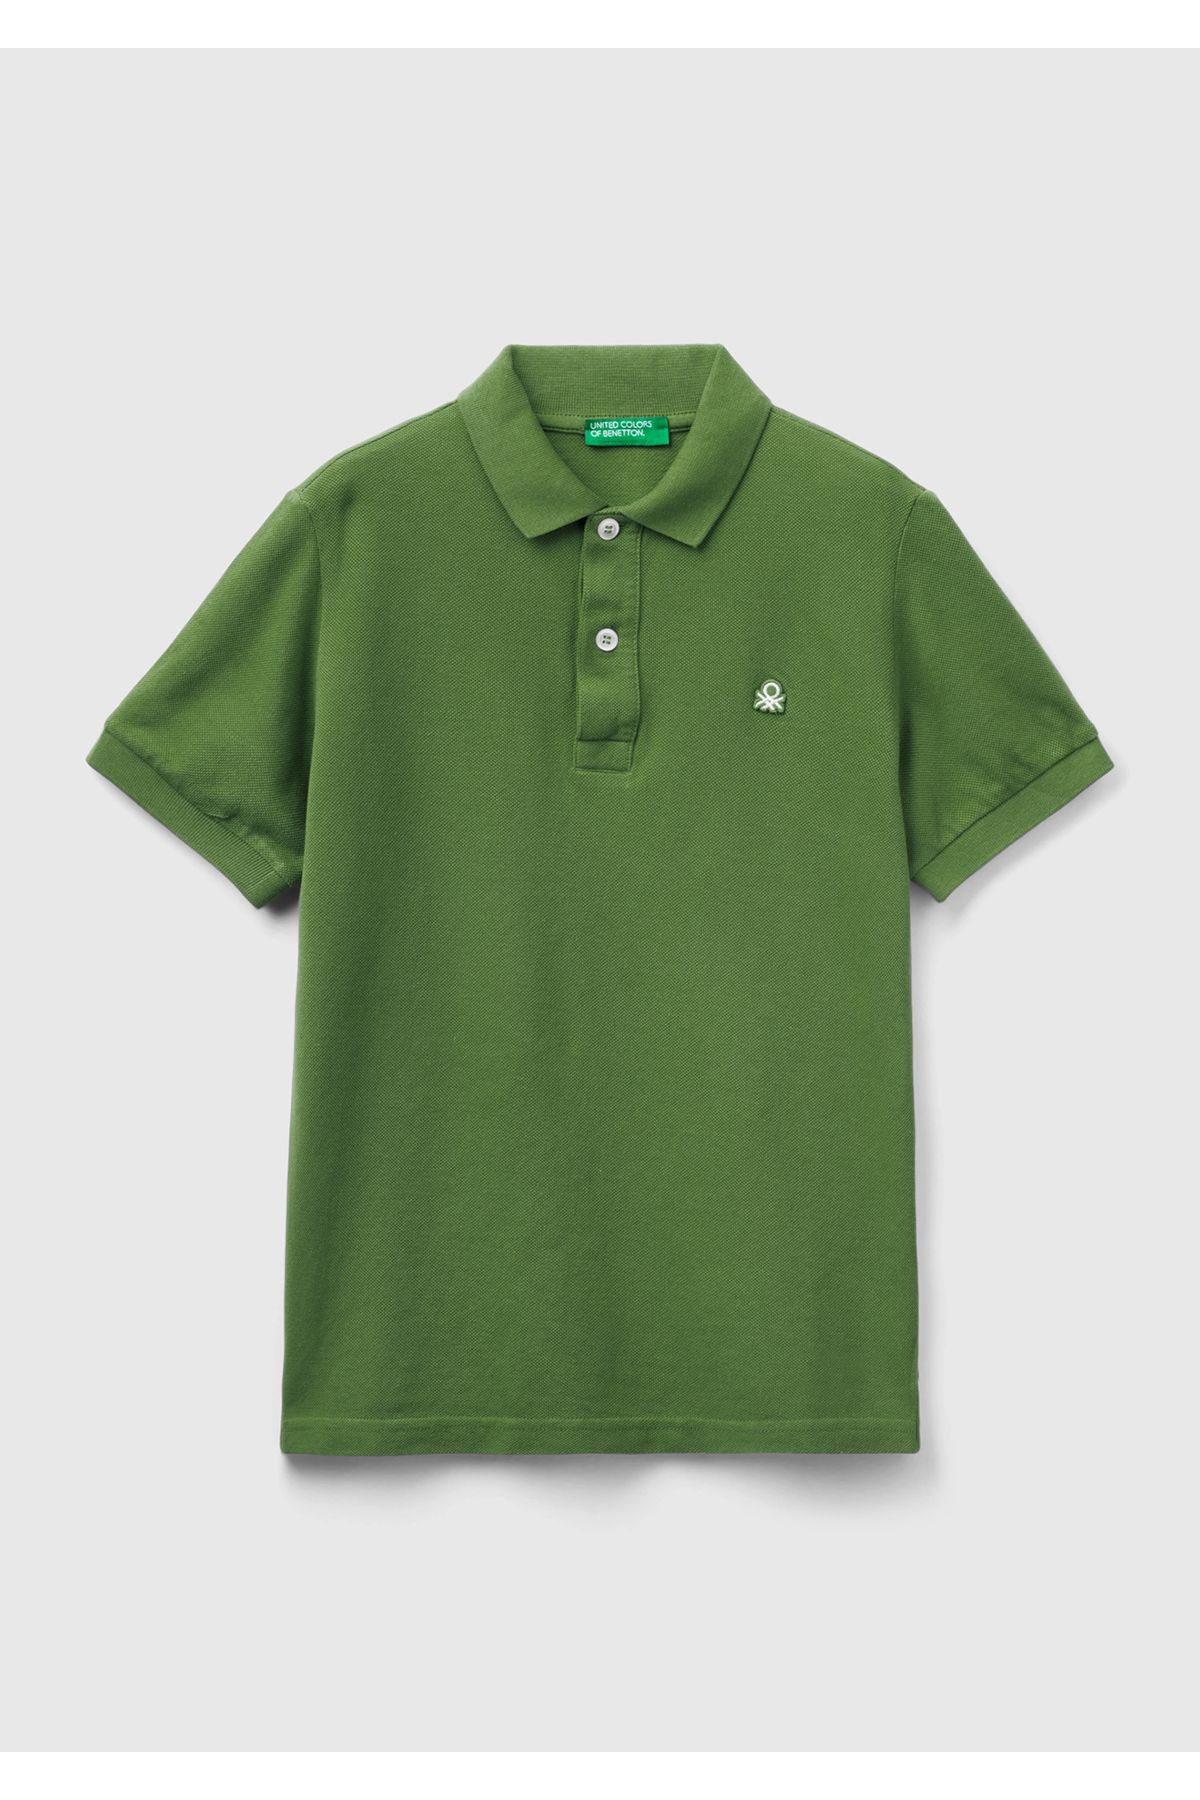 United Colors of Benetton Erkek Çocuk Haki Logolu Pike Polo T-Shirt